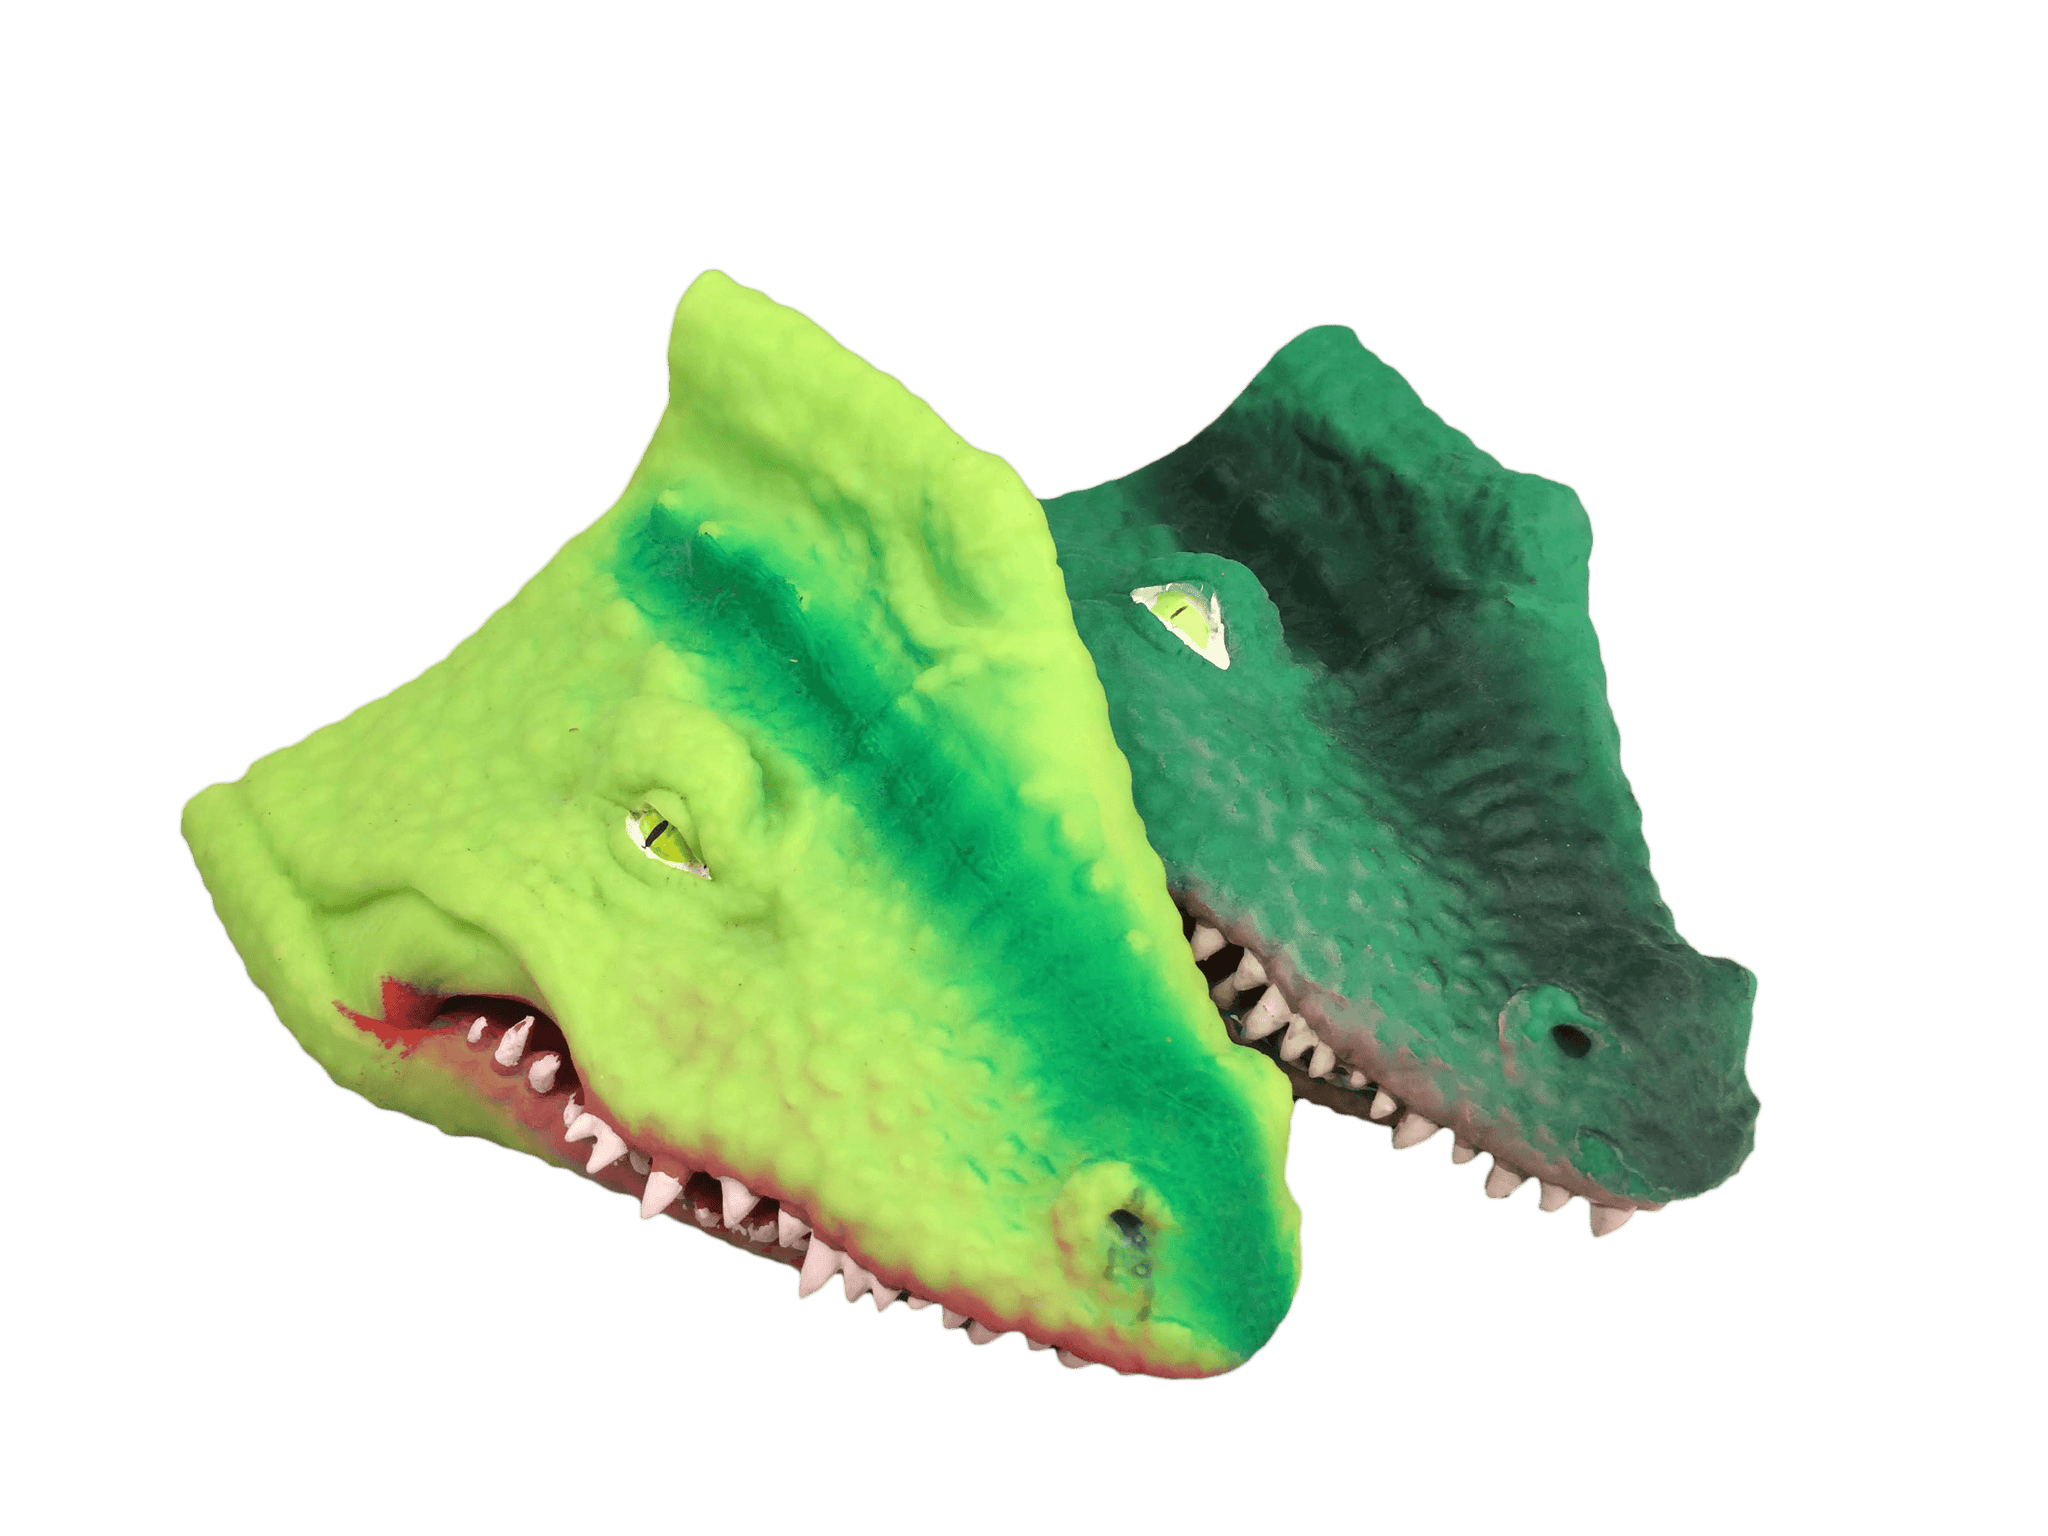 plastic silicone alligator hand puppets